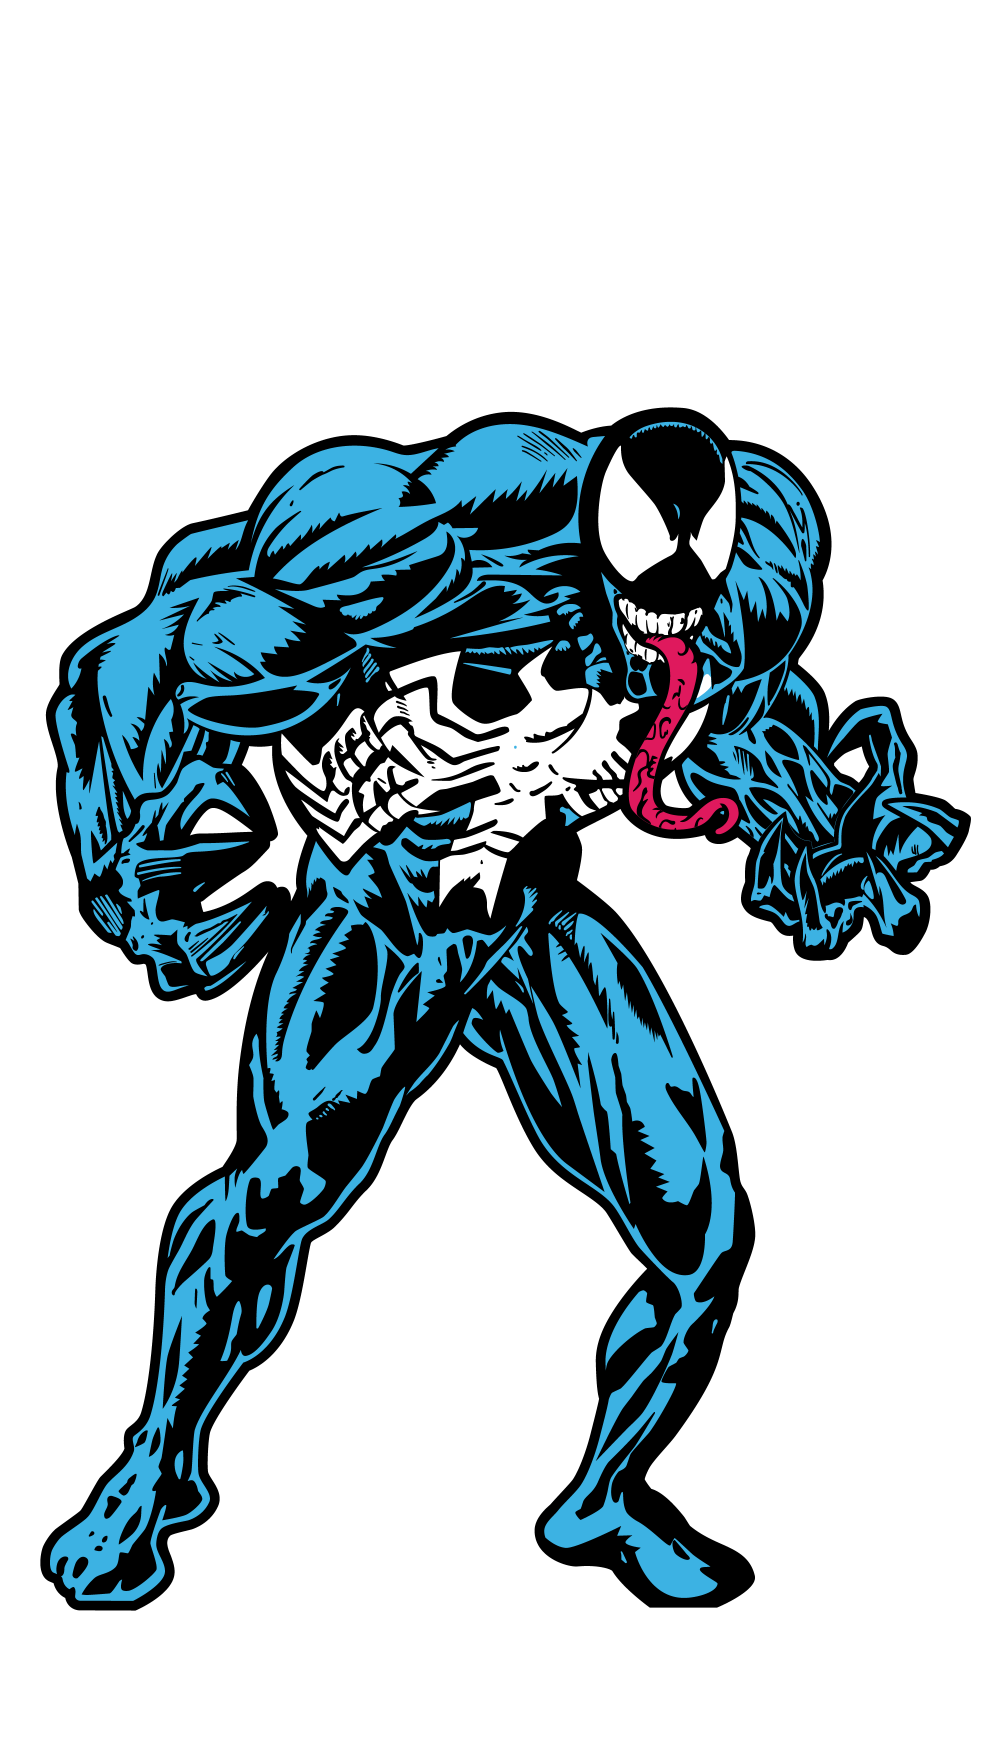 FiGPiN AP Artist Proof Marvel Classic Venom 498 Collectible Enamel Pin